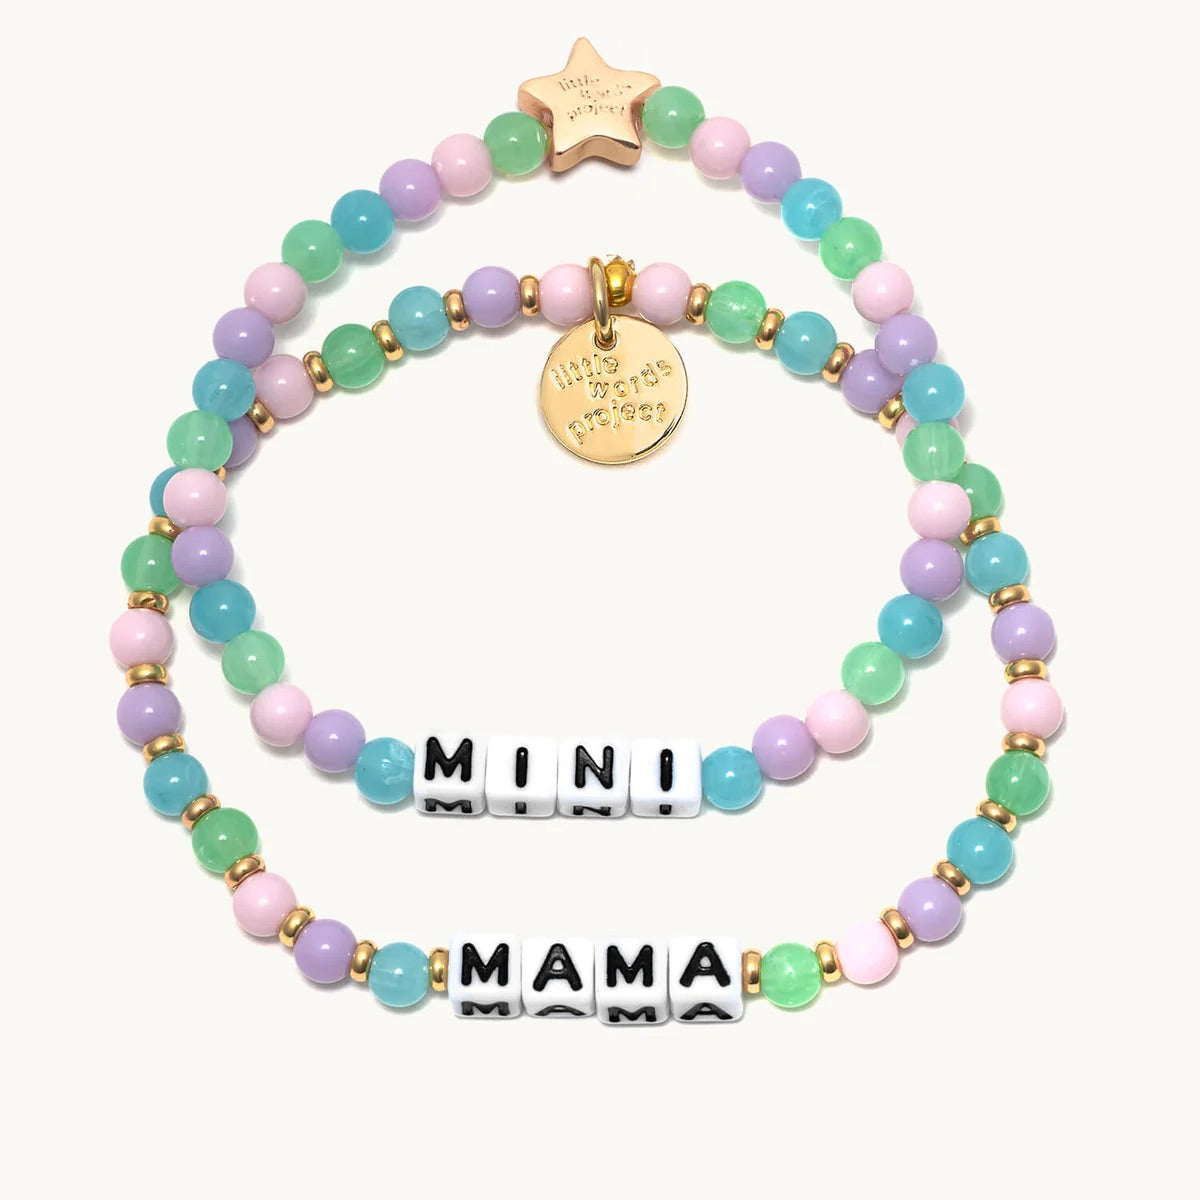 Mini and Mama beaded bracelet